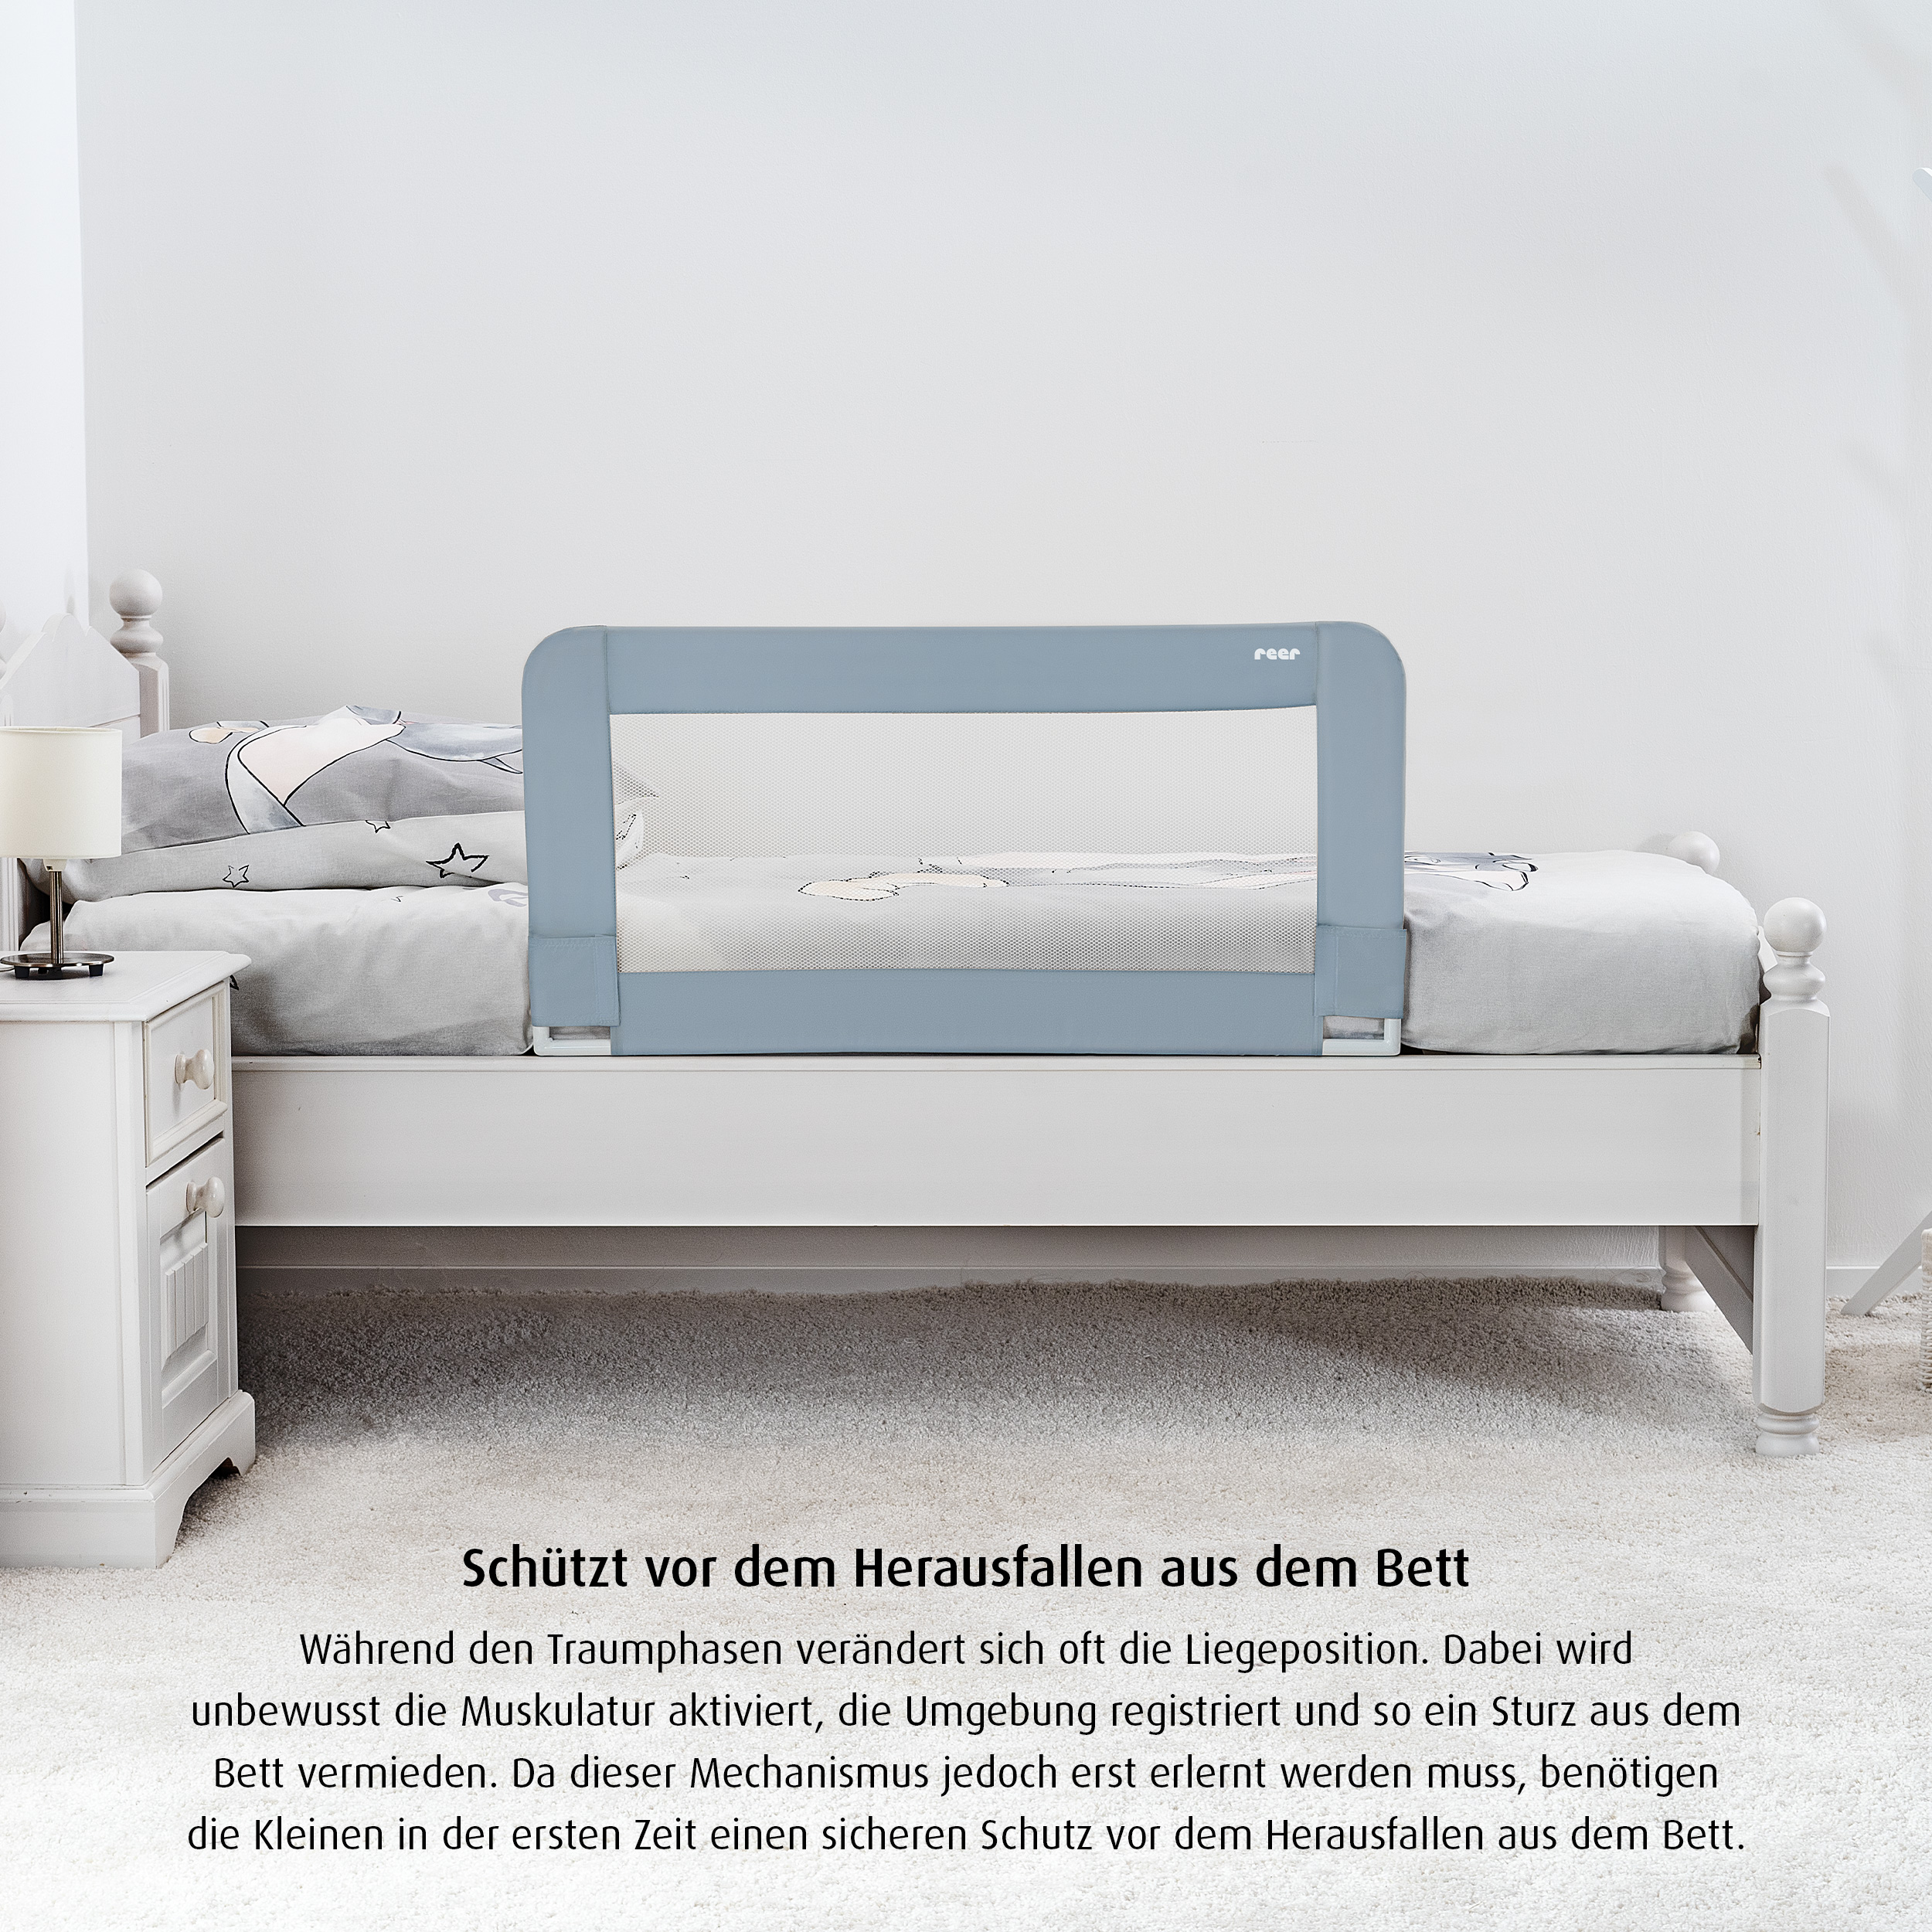 Sleep'n Keep bed rail, blue-grey, 150 cm - 180 cm